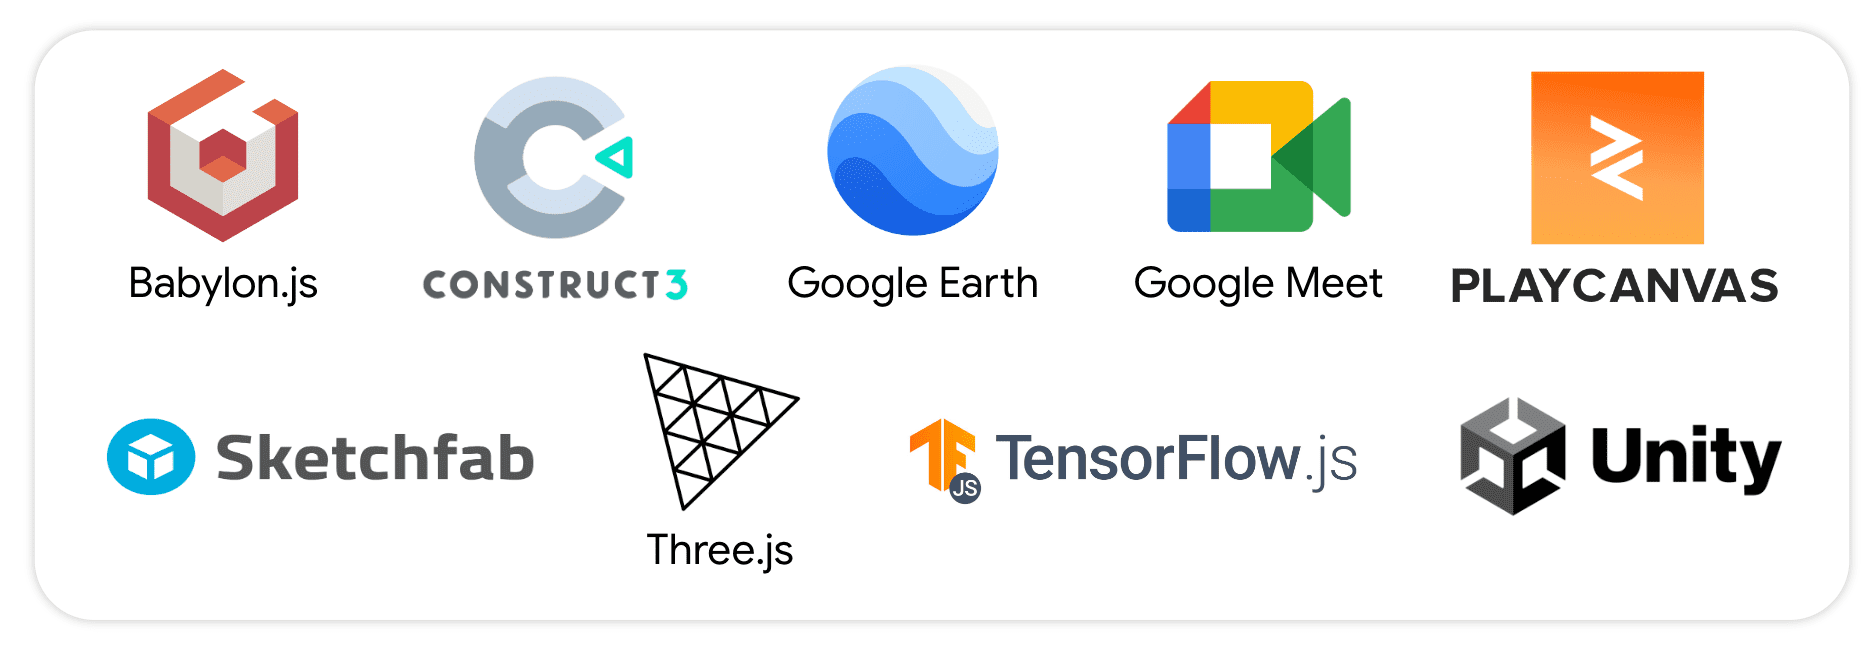 Babylon.js、建築 3、Google 地球、Google Meet、PlayCanvas、Sketchfab、Three.JS、TensorFlow.js 和 Unity。